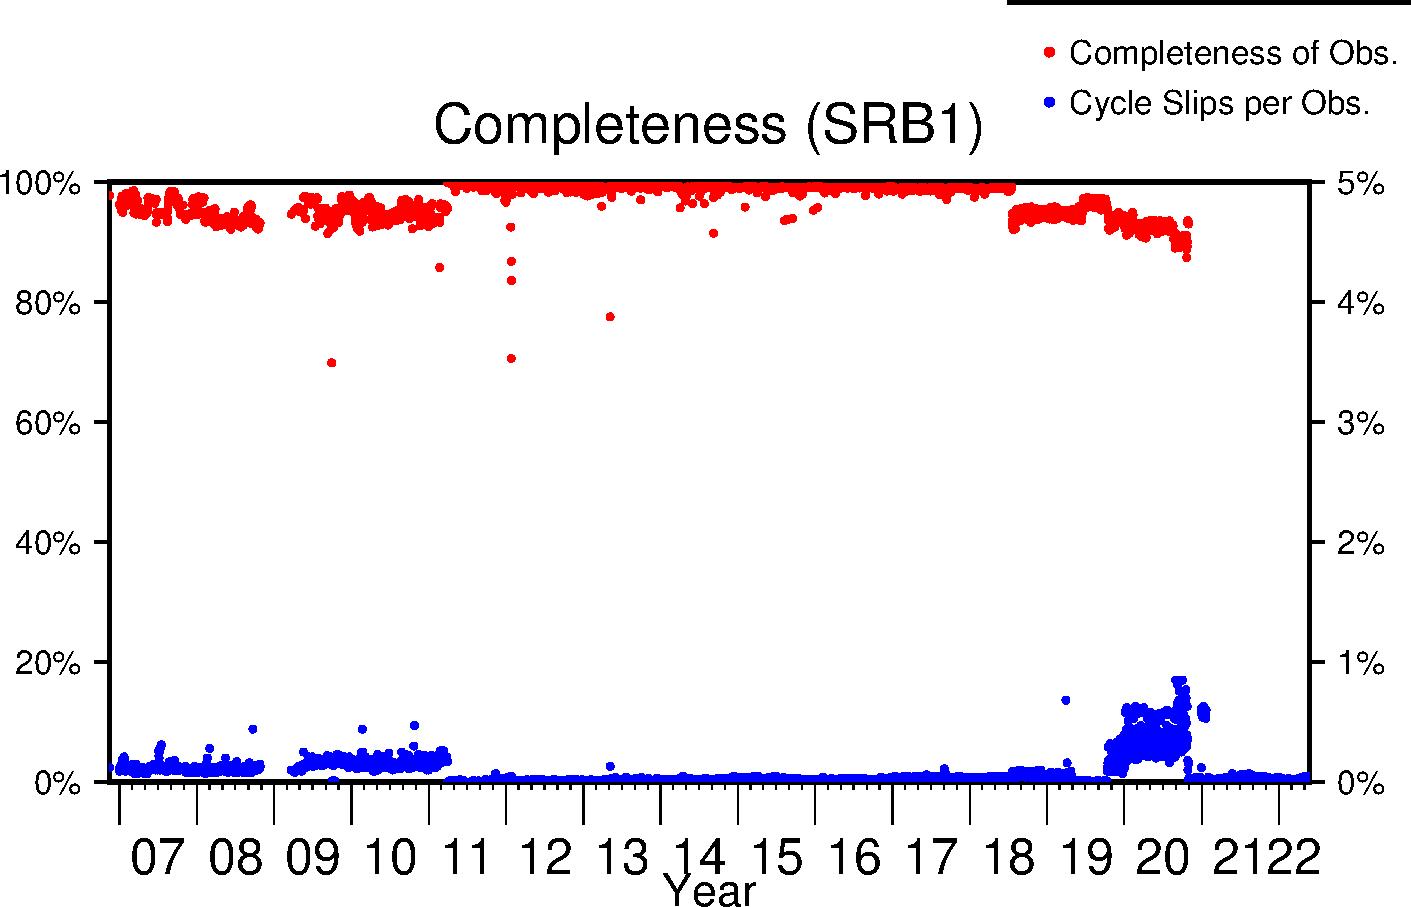 SRB1 completeness lifetime